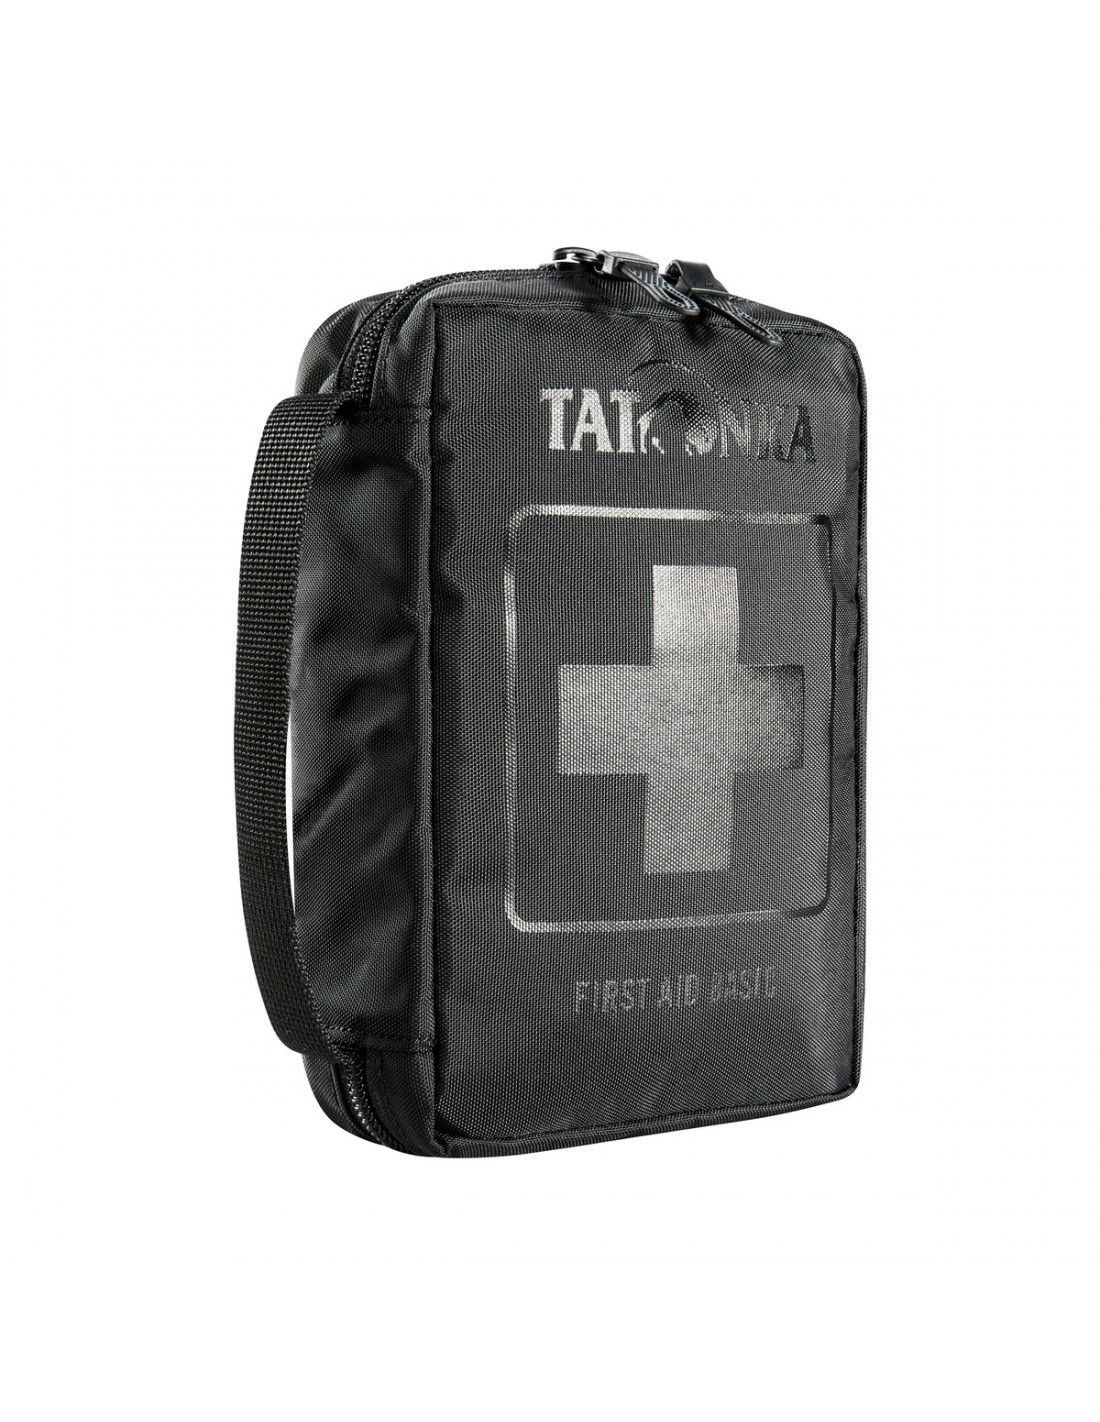 Tatonka First Aid Basic, Erste Hilfe Set, black von Tatonka